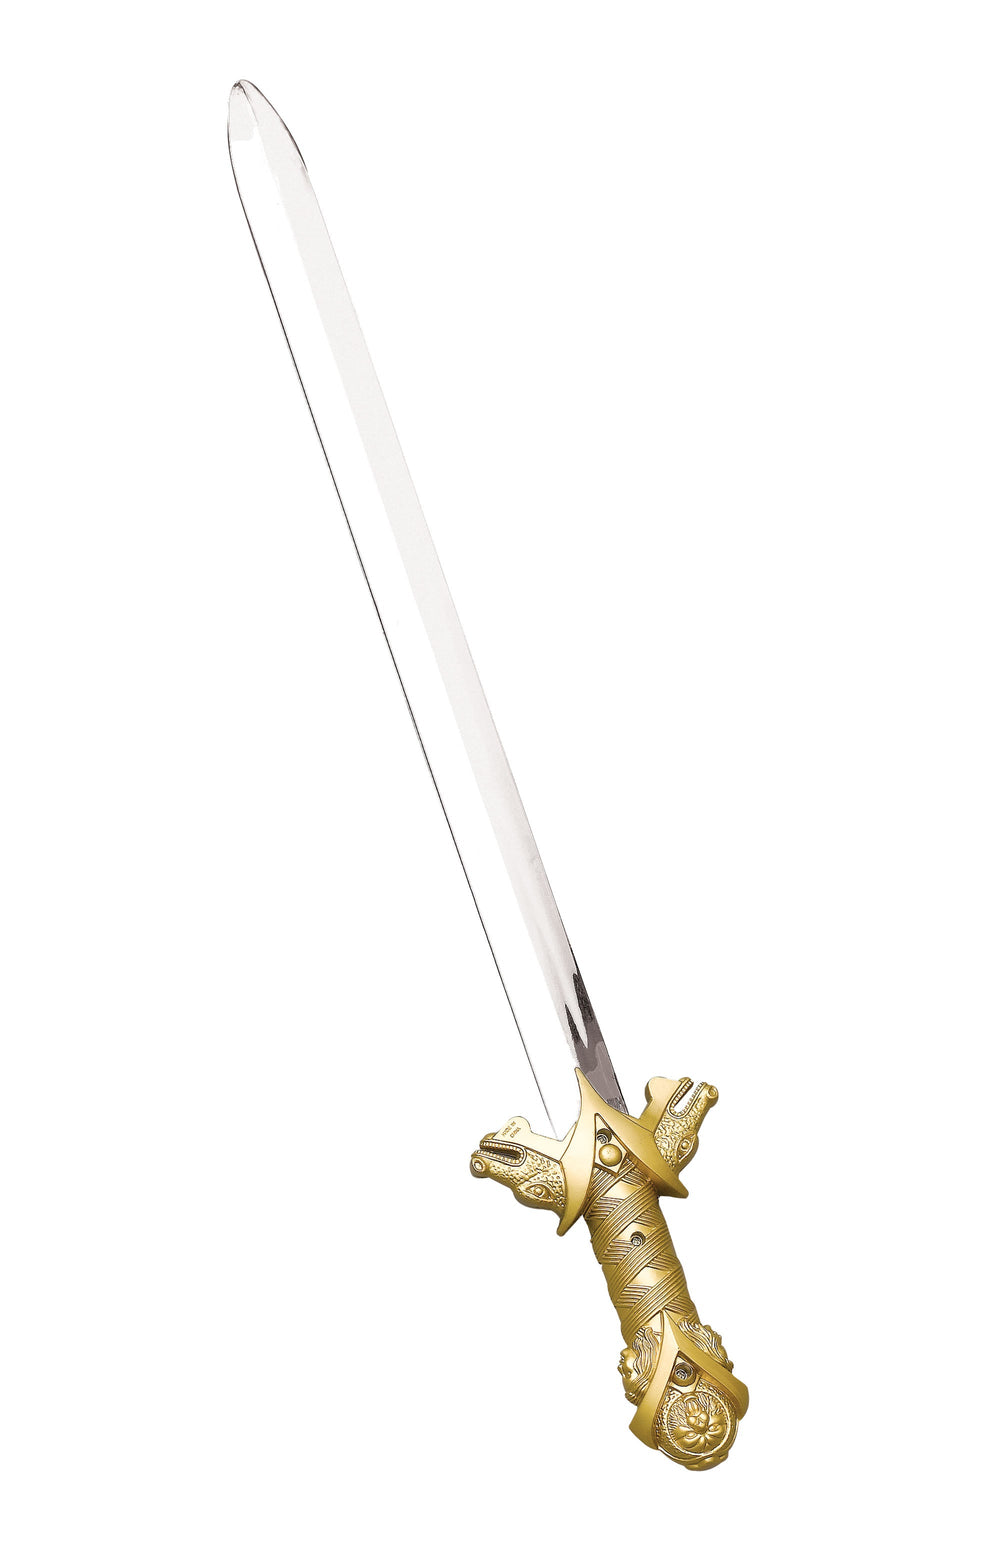 Ancient knight sword